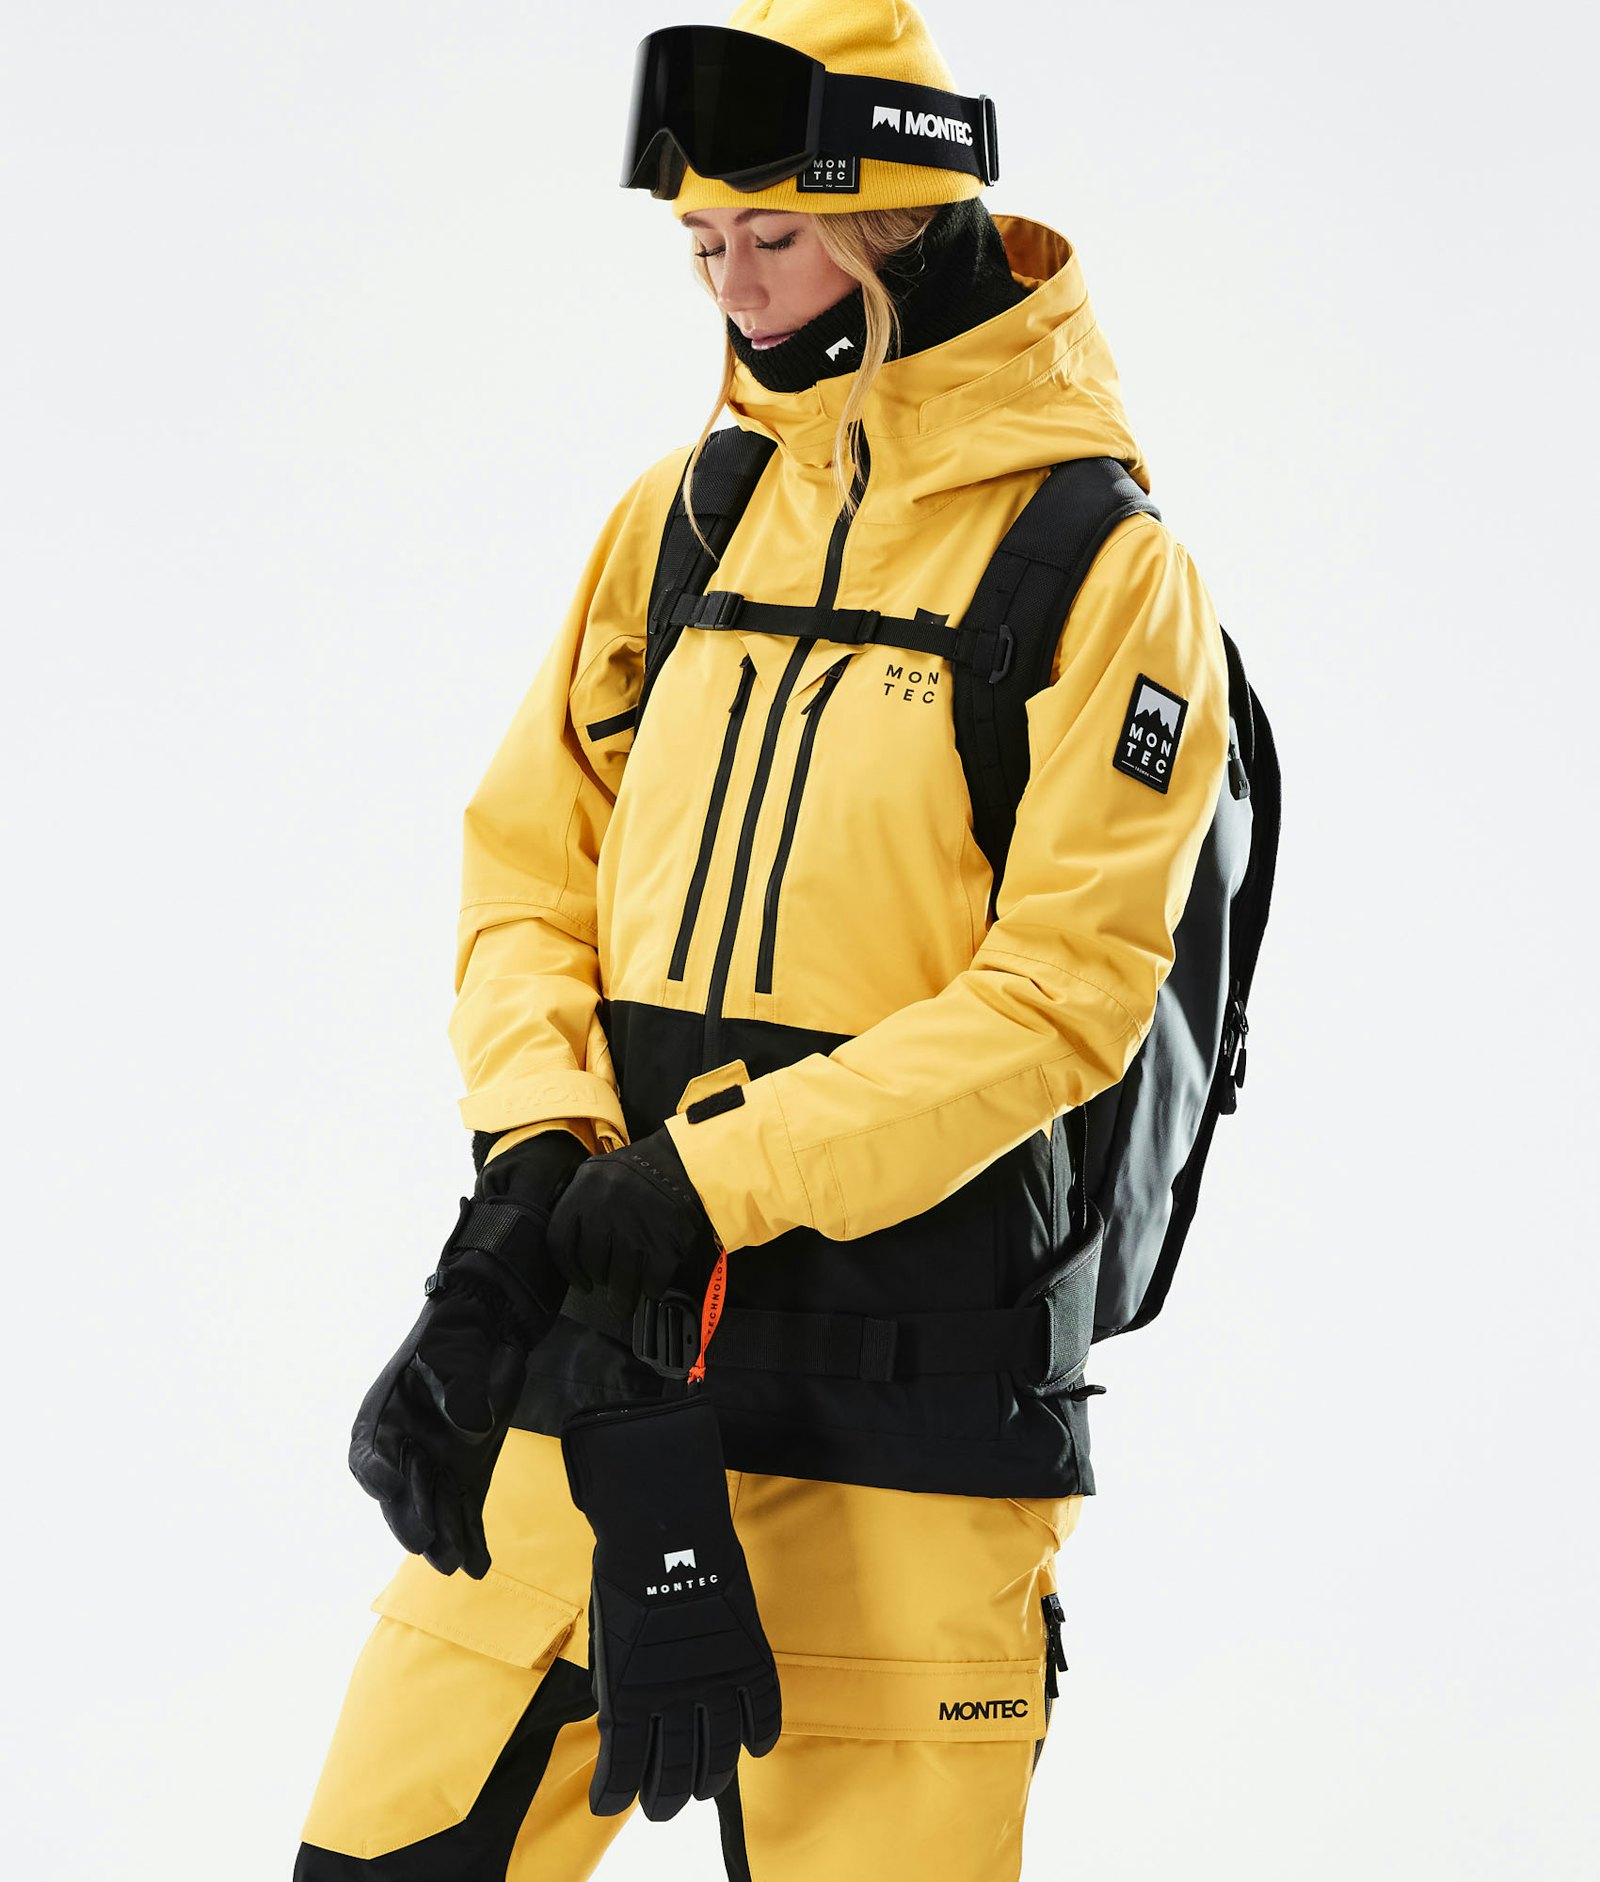 Moss W 2021 Snowboardjacke Damen Yellow/Black